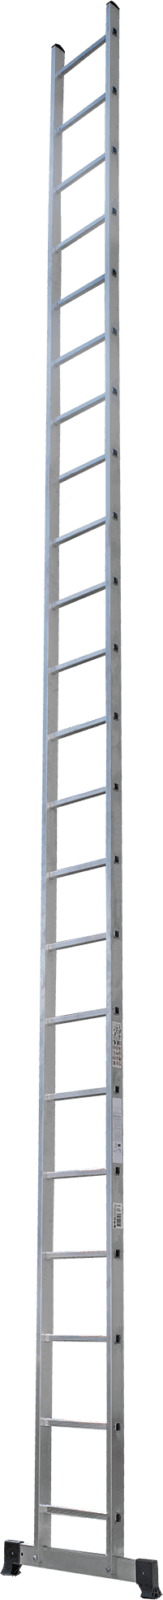 Лестница алюминиевая приставная NV1210 артикул 1210122